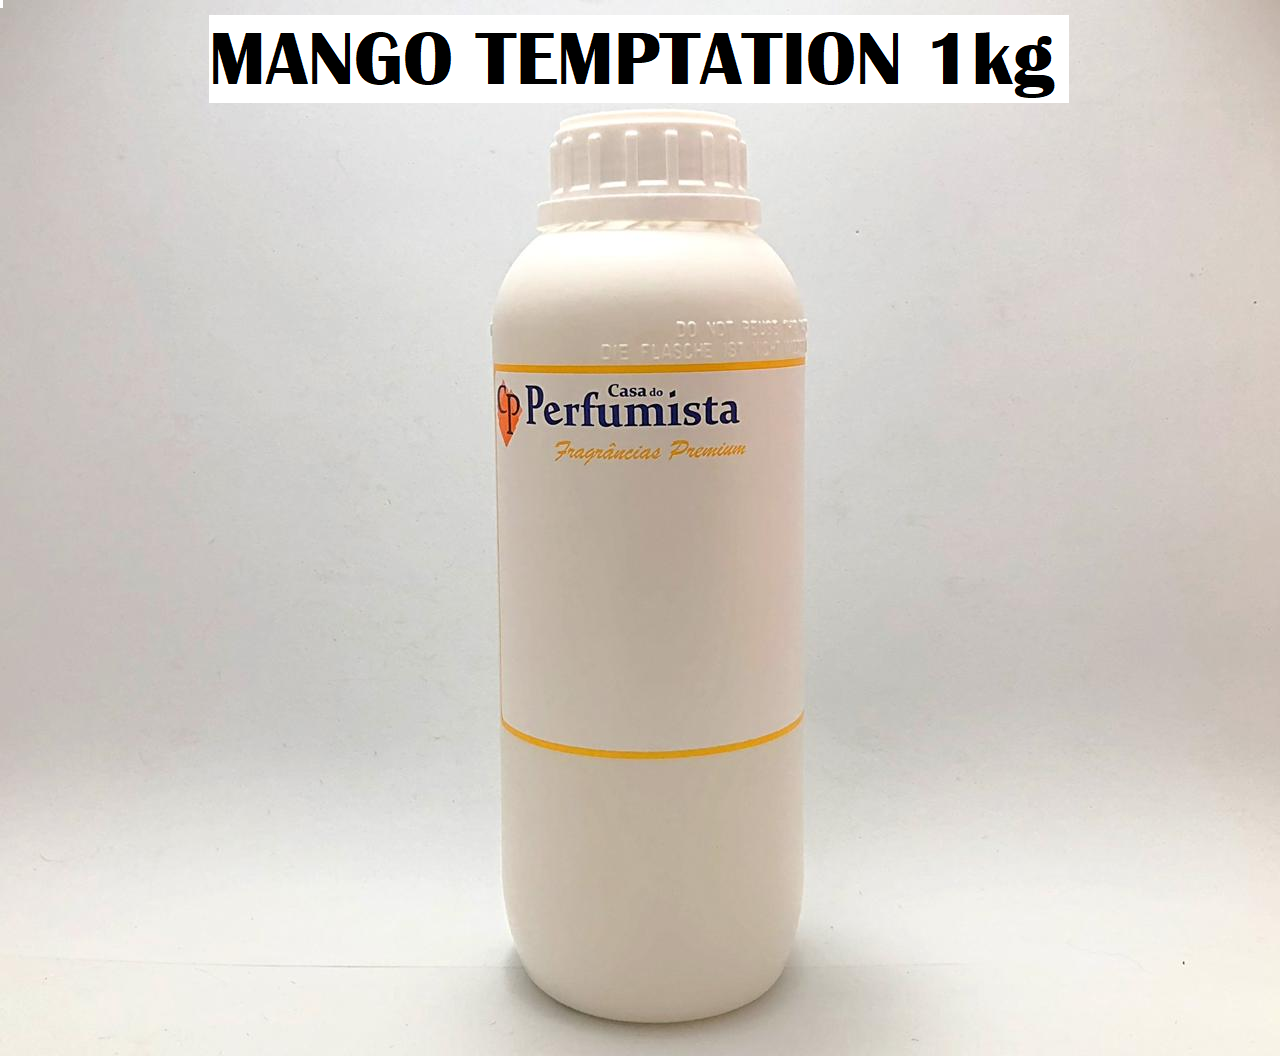 MANGO TEMPTATION - 1kg